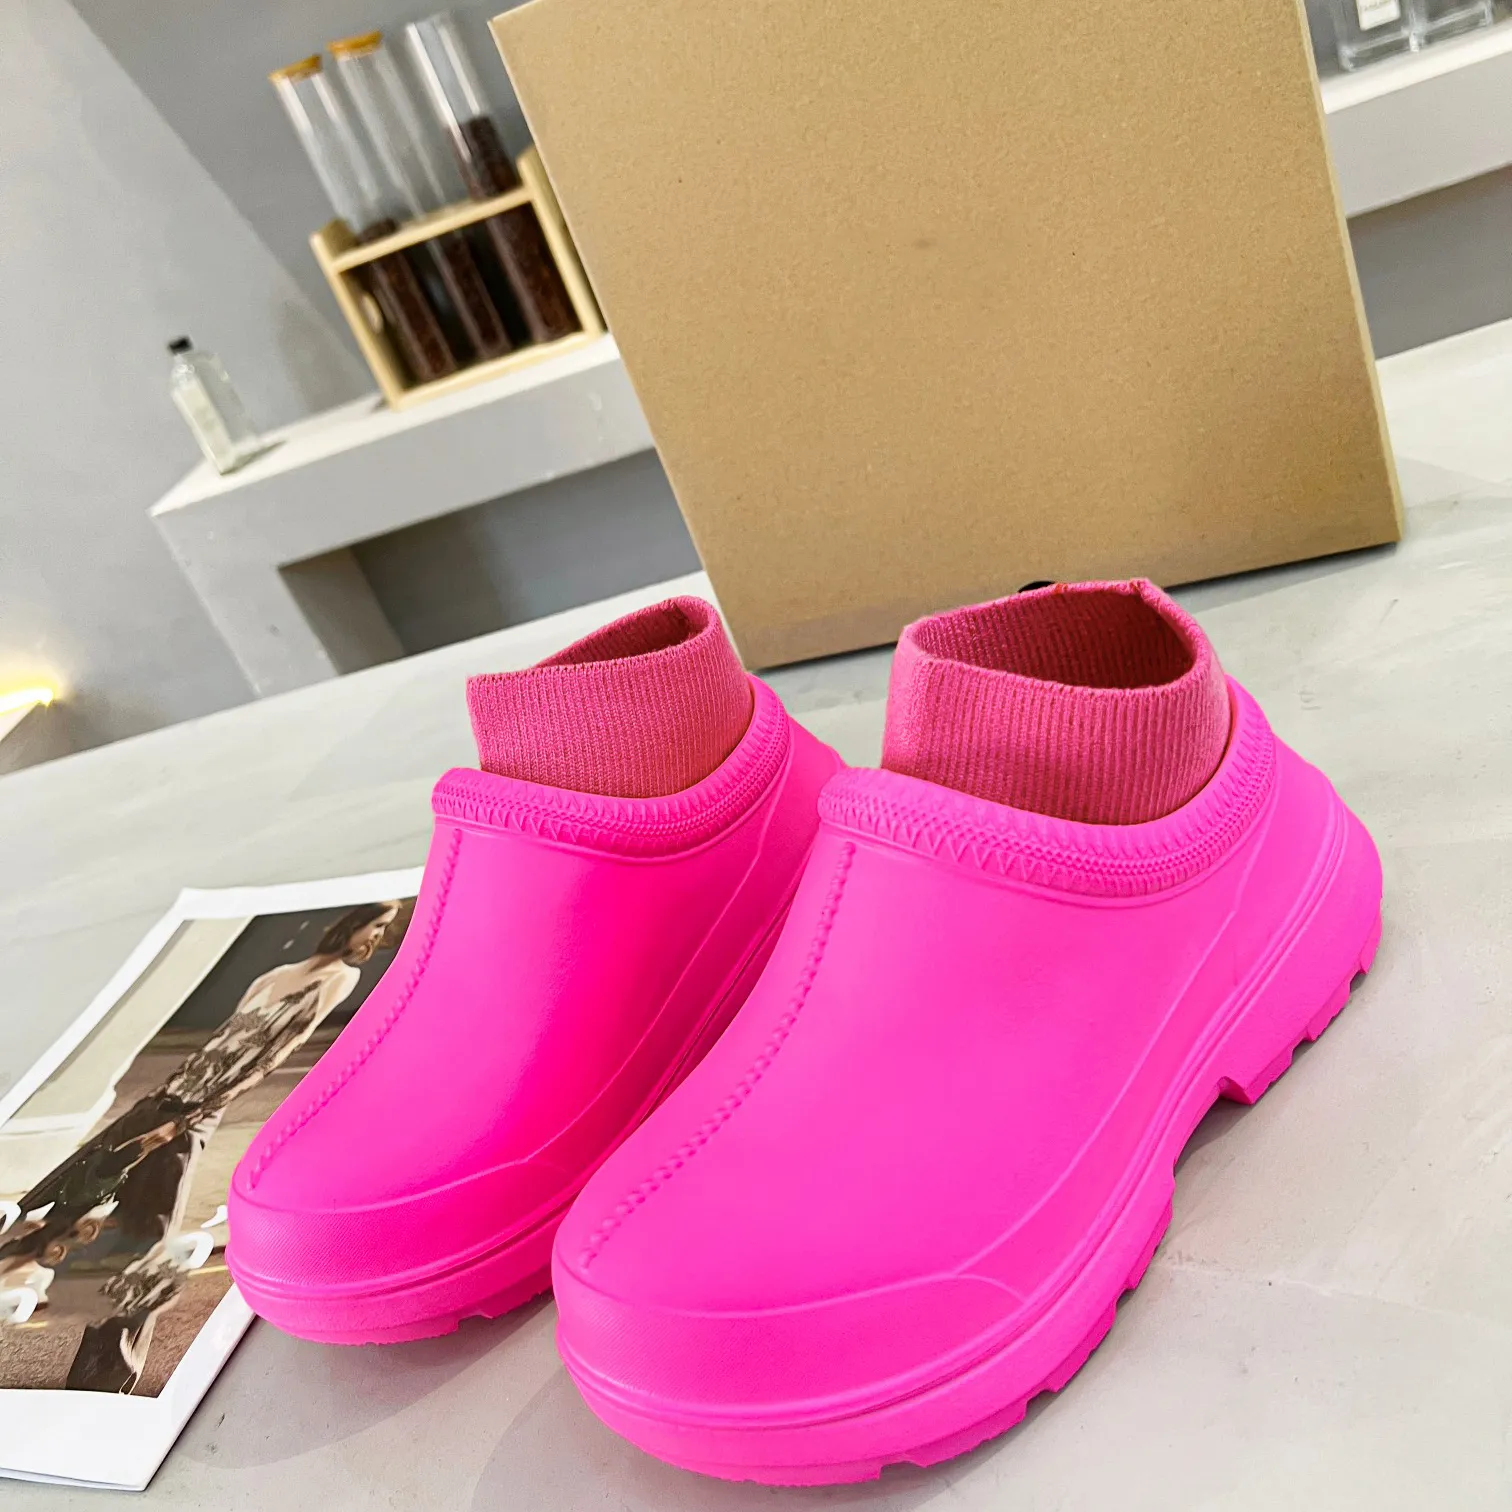 ugge boots australia wool boot rain boots women rubber socks boties anti-slip Brilliant yellow pink green uggsly boots